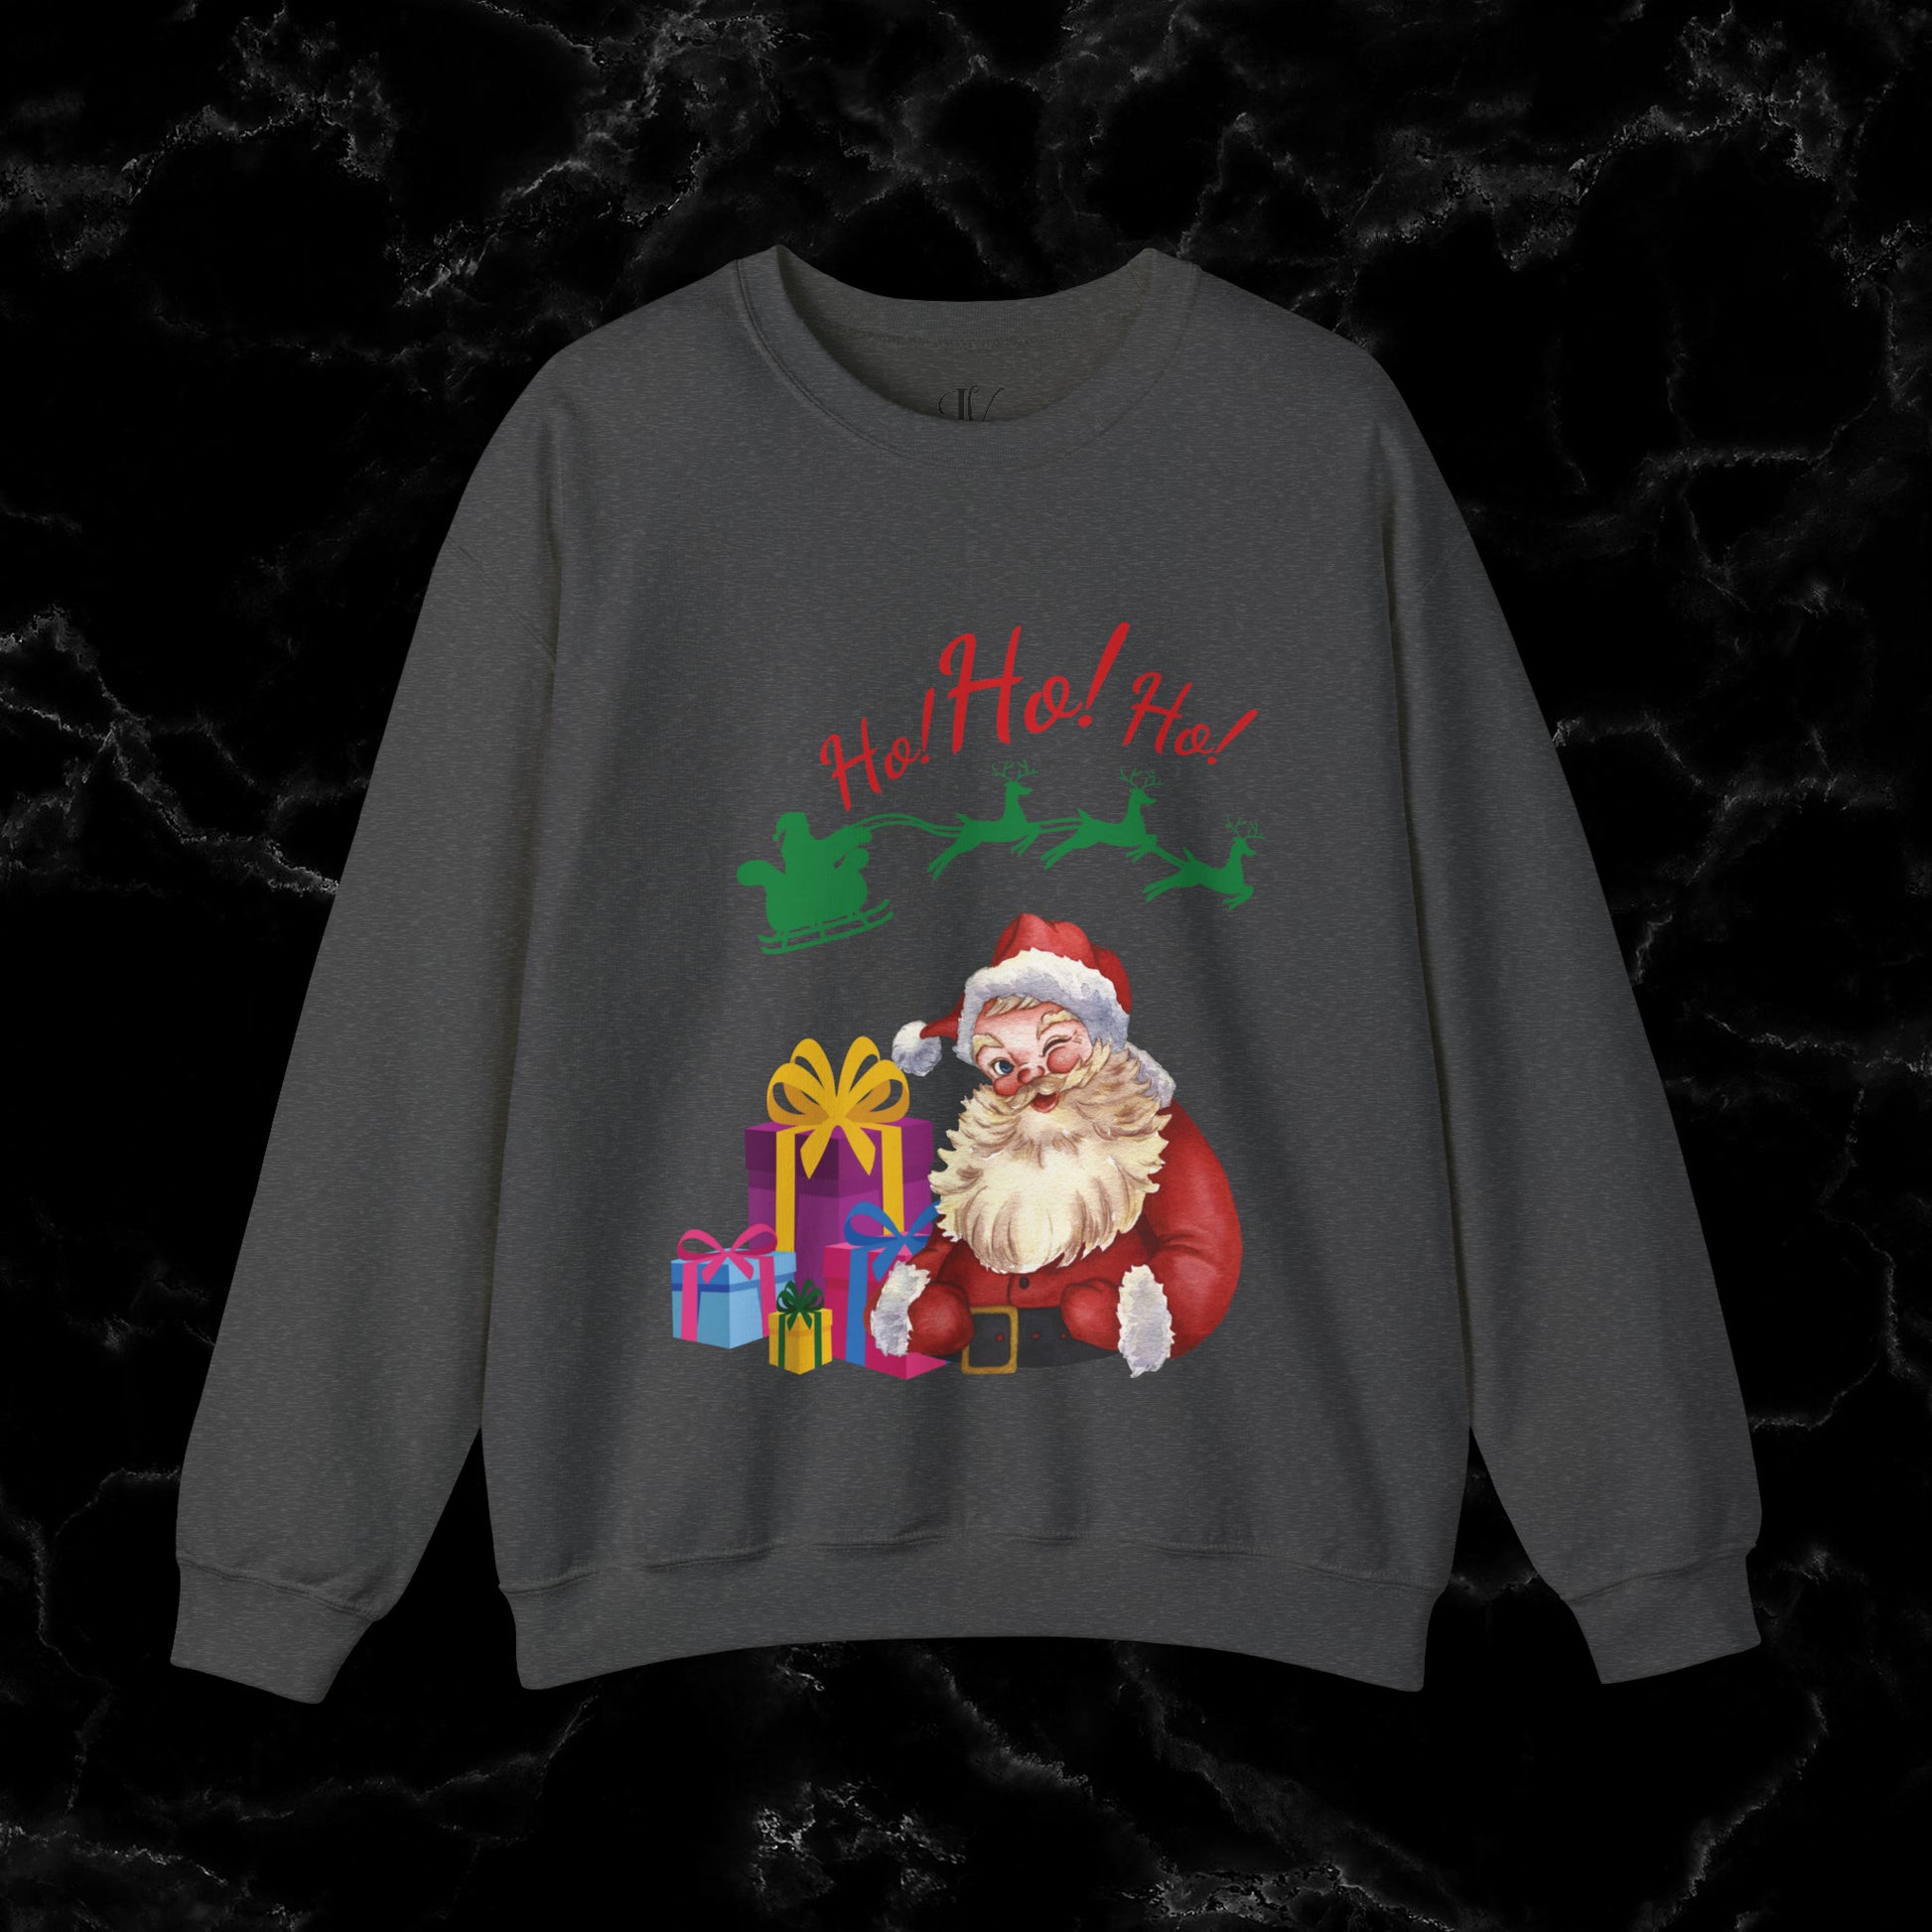 Retro Santa Sweatshirt - Vintage Christmas Fashion for Holiday Cheer Sweatshirt S Dark Heather 